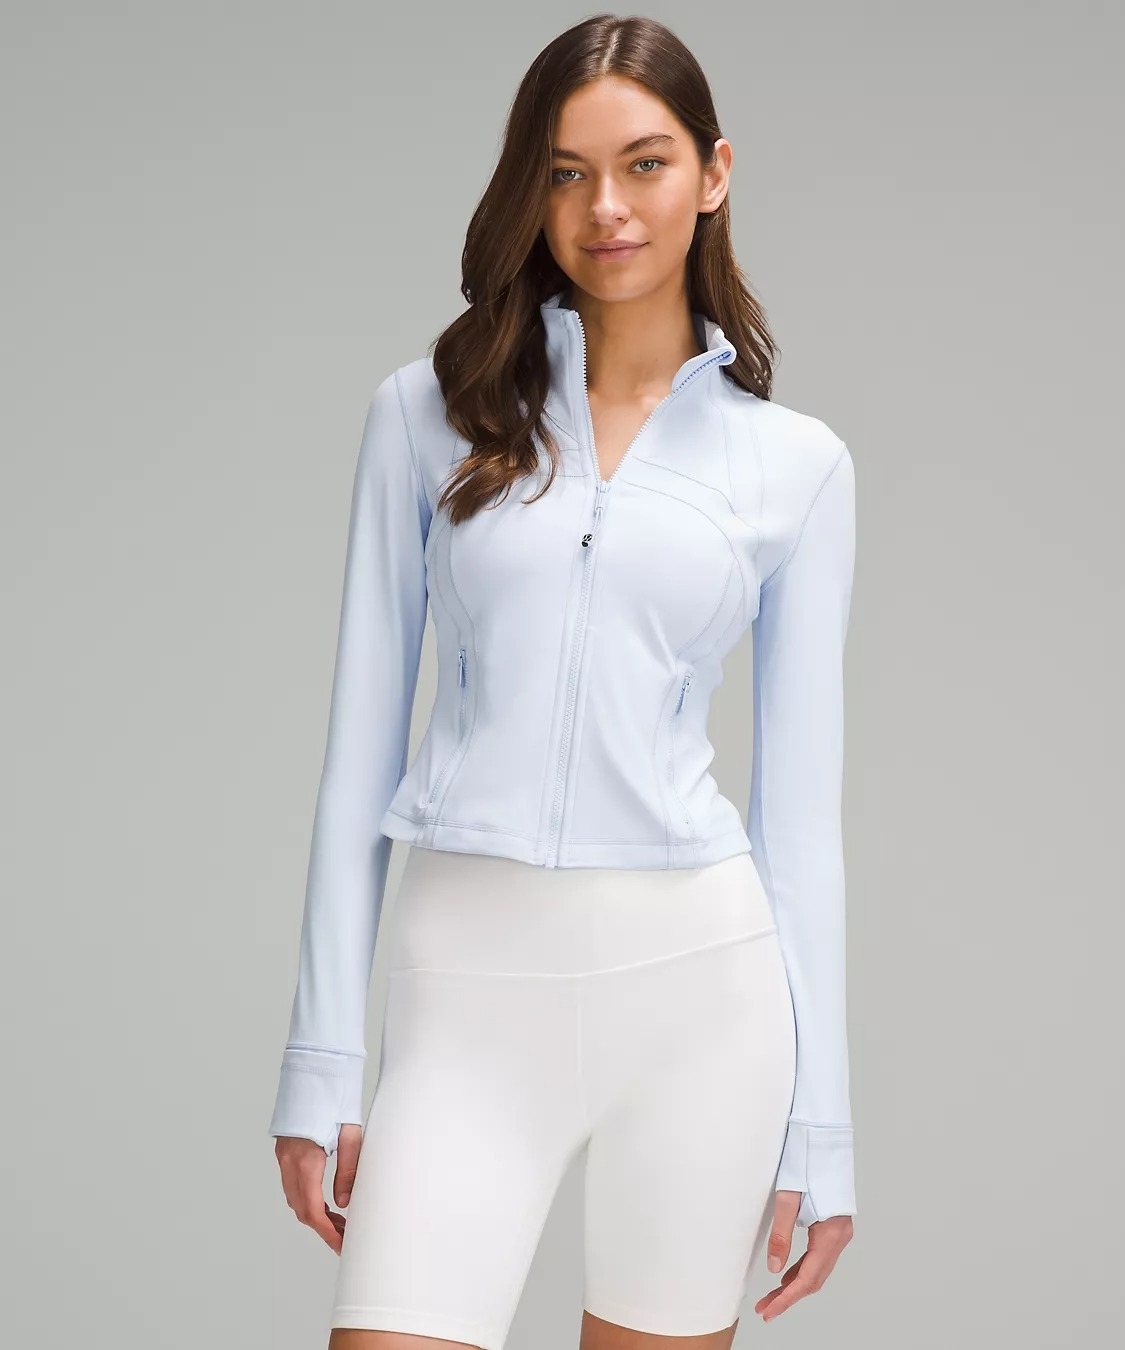 Model wearing light blue cropped zip-up jacket